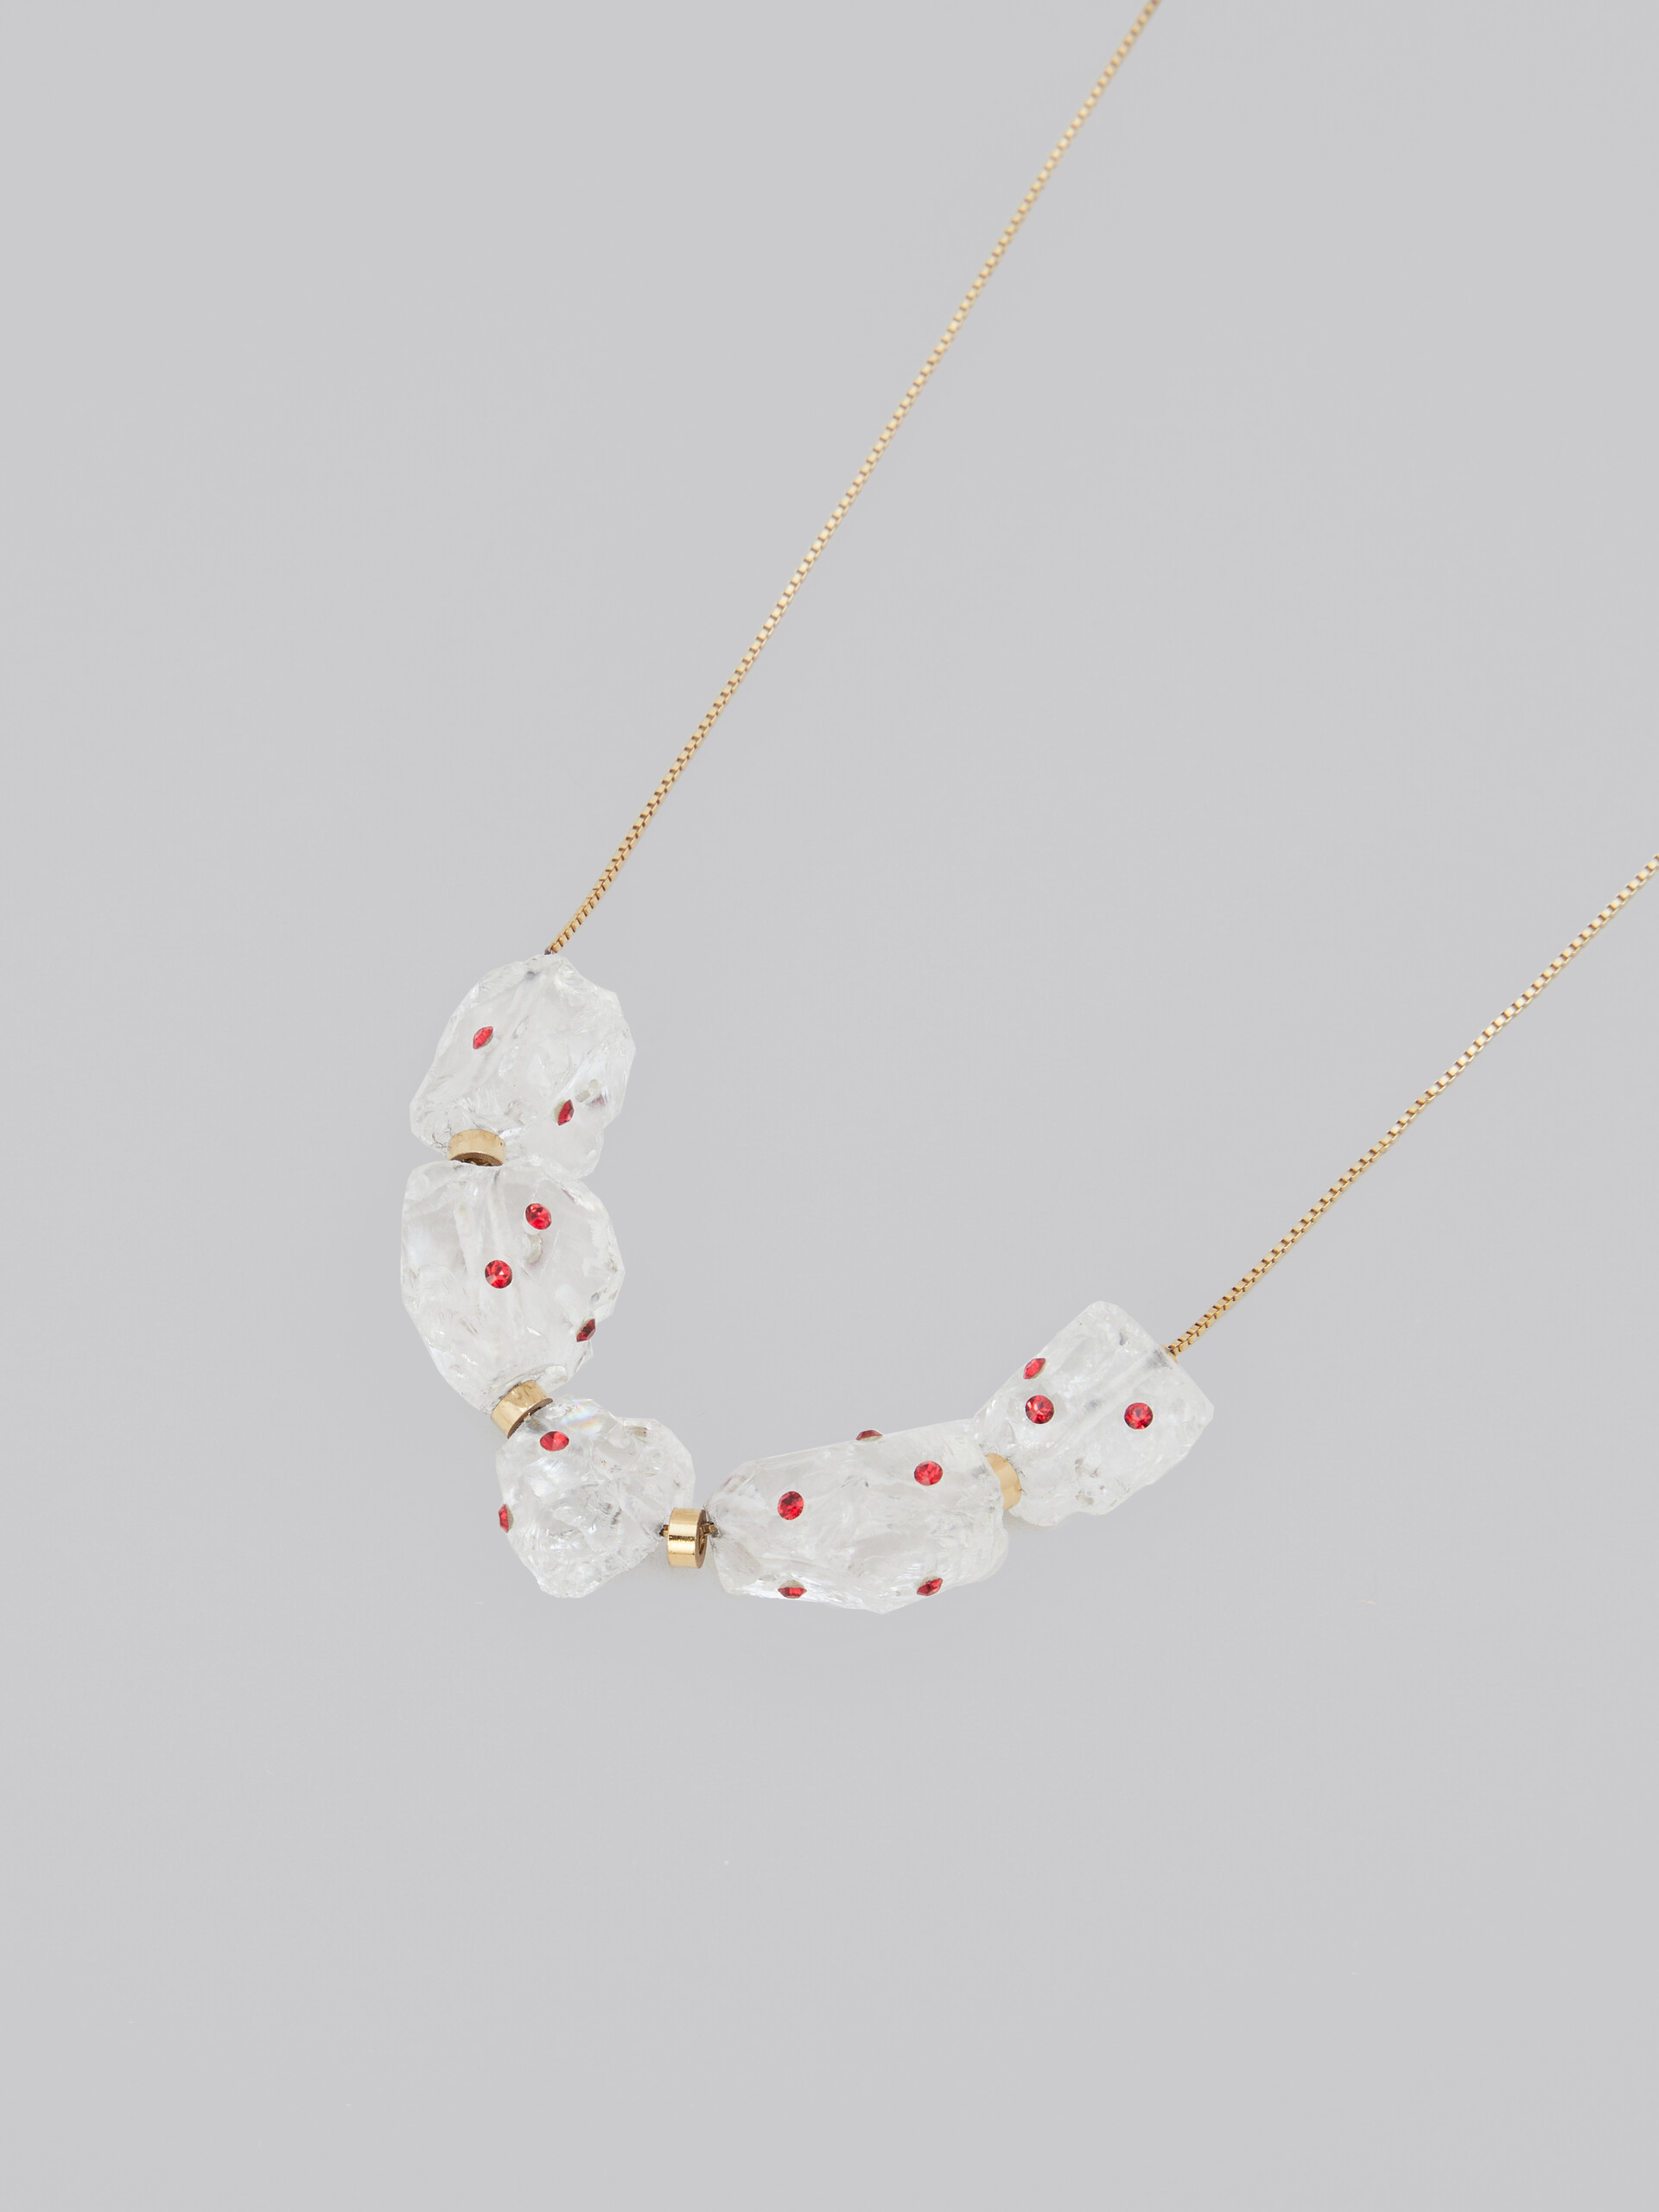 White quartz multi-stone necklace with rhinestone polka dots - Necklaces - Image 3